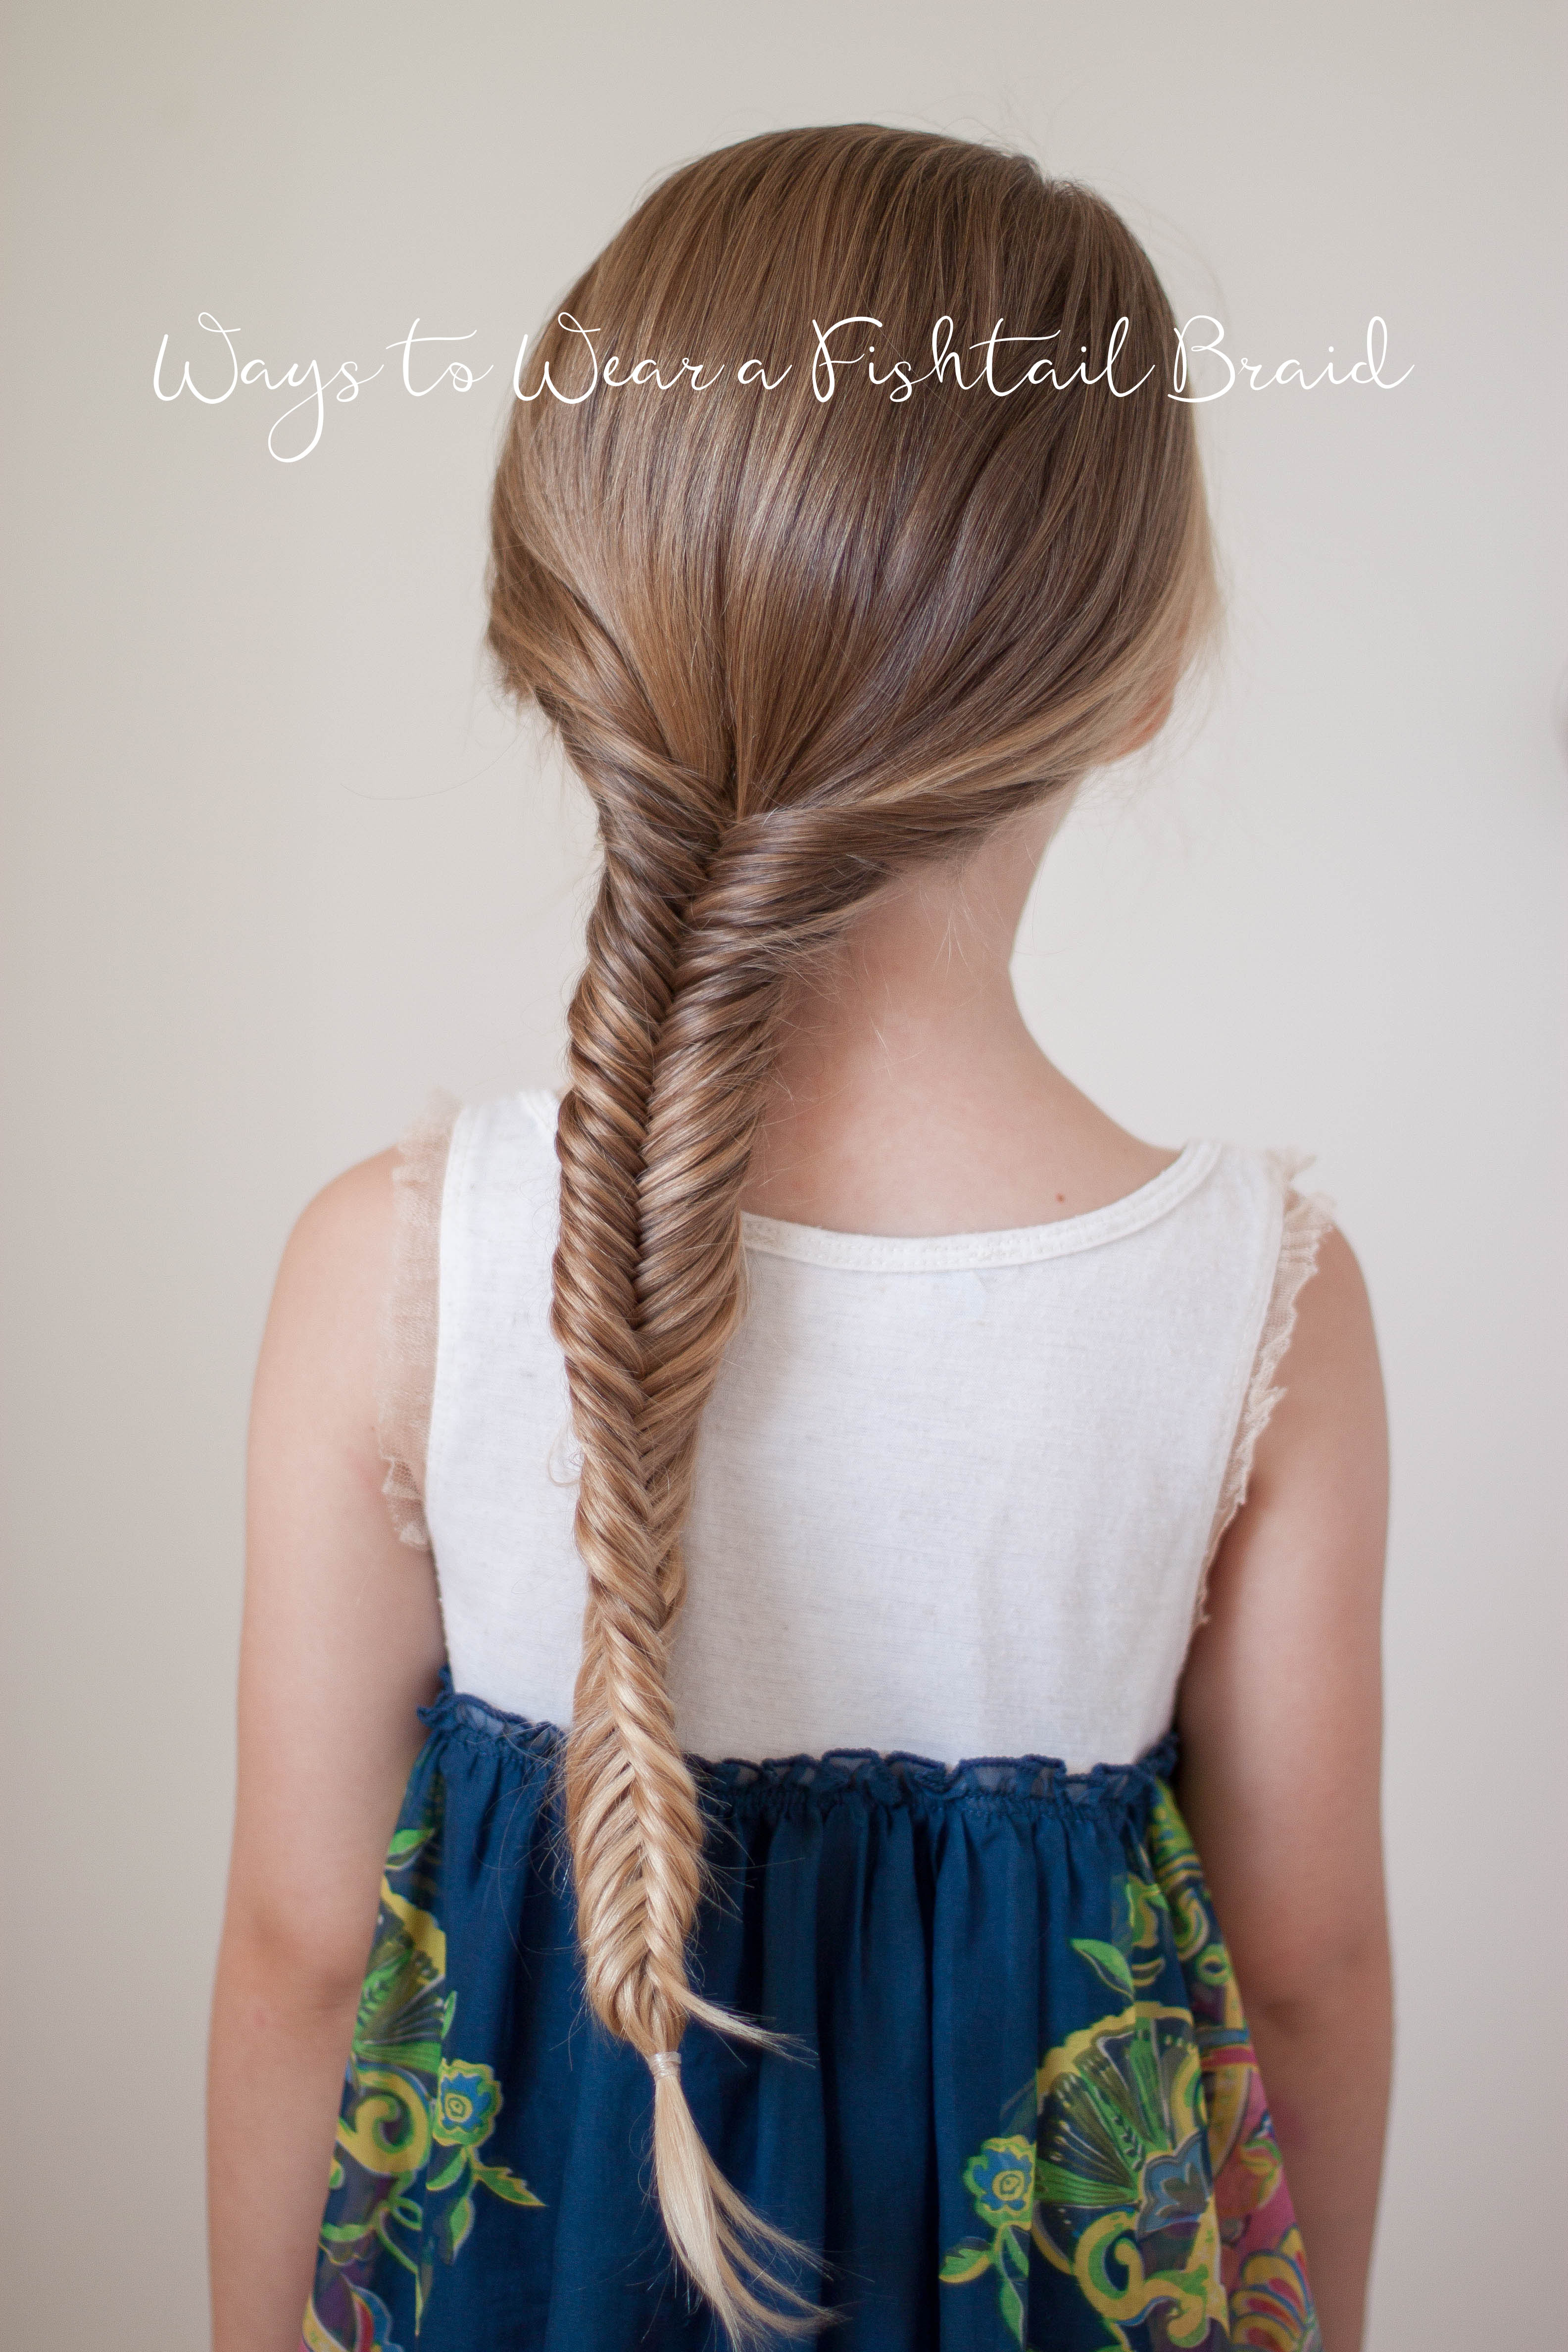 Ways to Wear a Fishtail Braid | Cute Girls Hairstyles